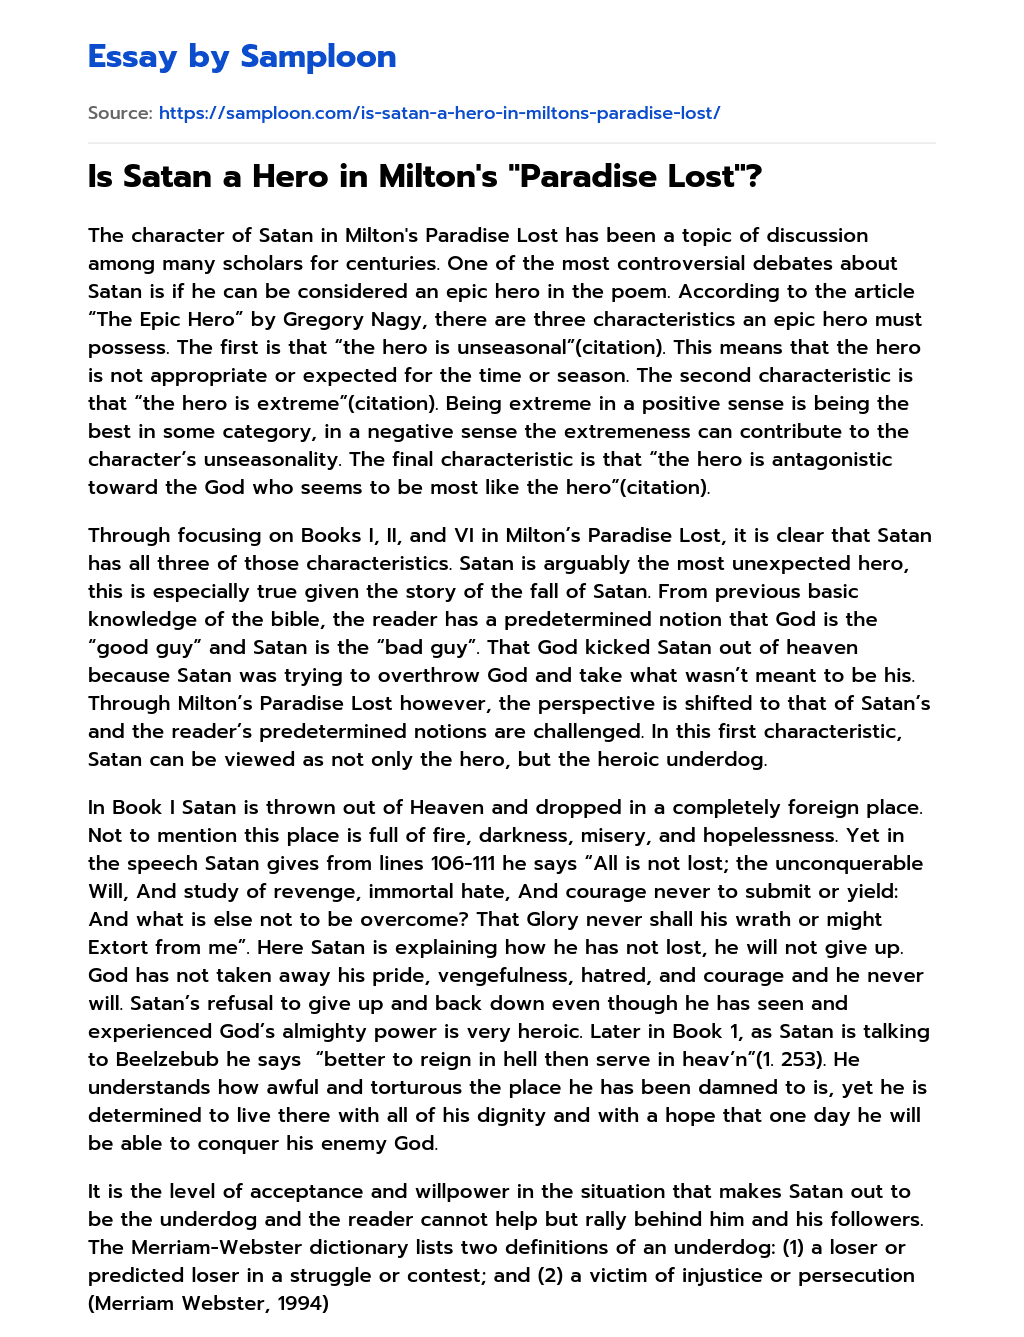 Is Satan a Hero in Milton’s “Paradise Lost”? essay